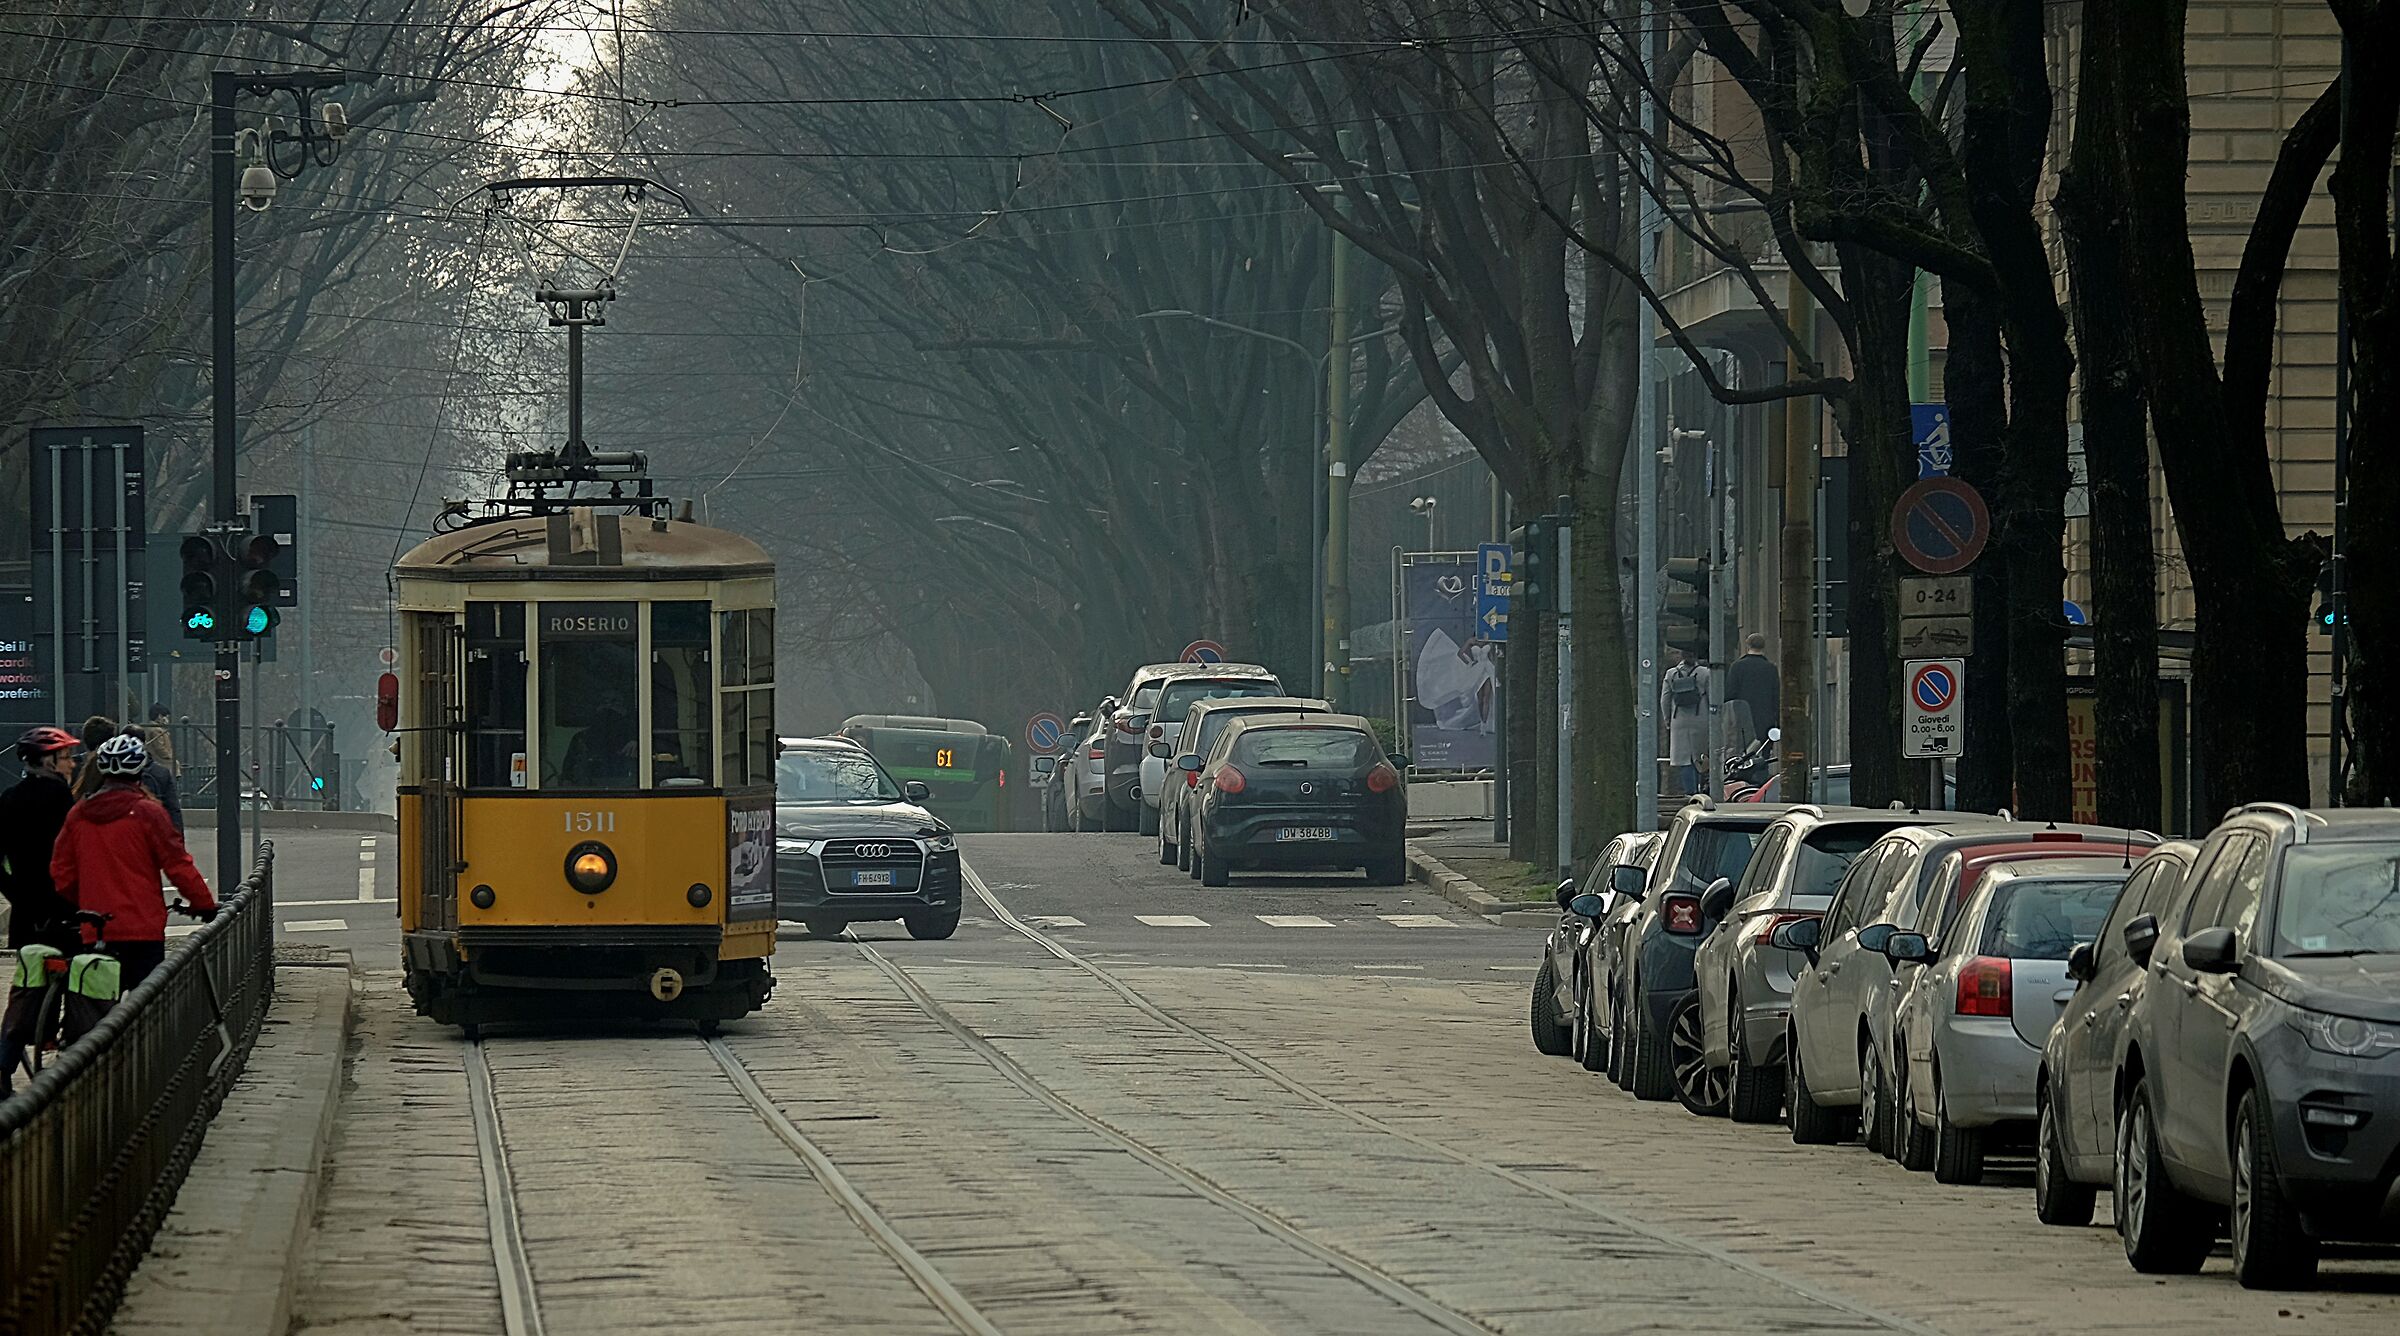 Tram ,Milanese icon ...